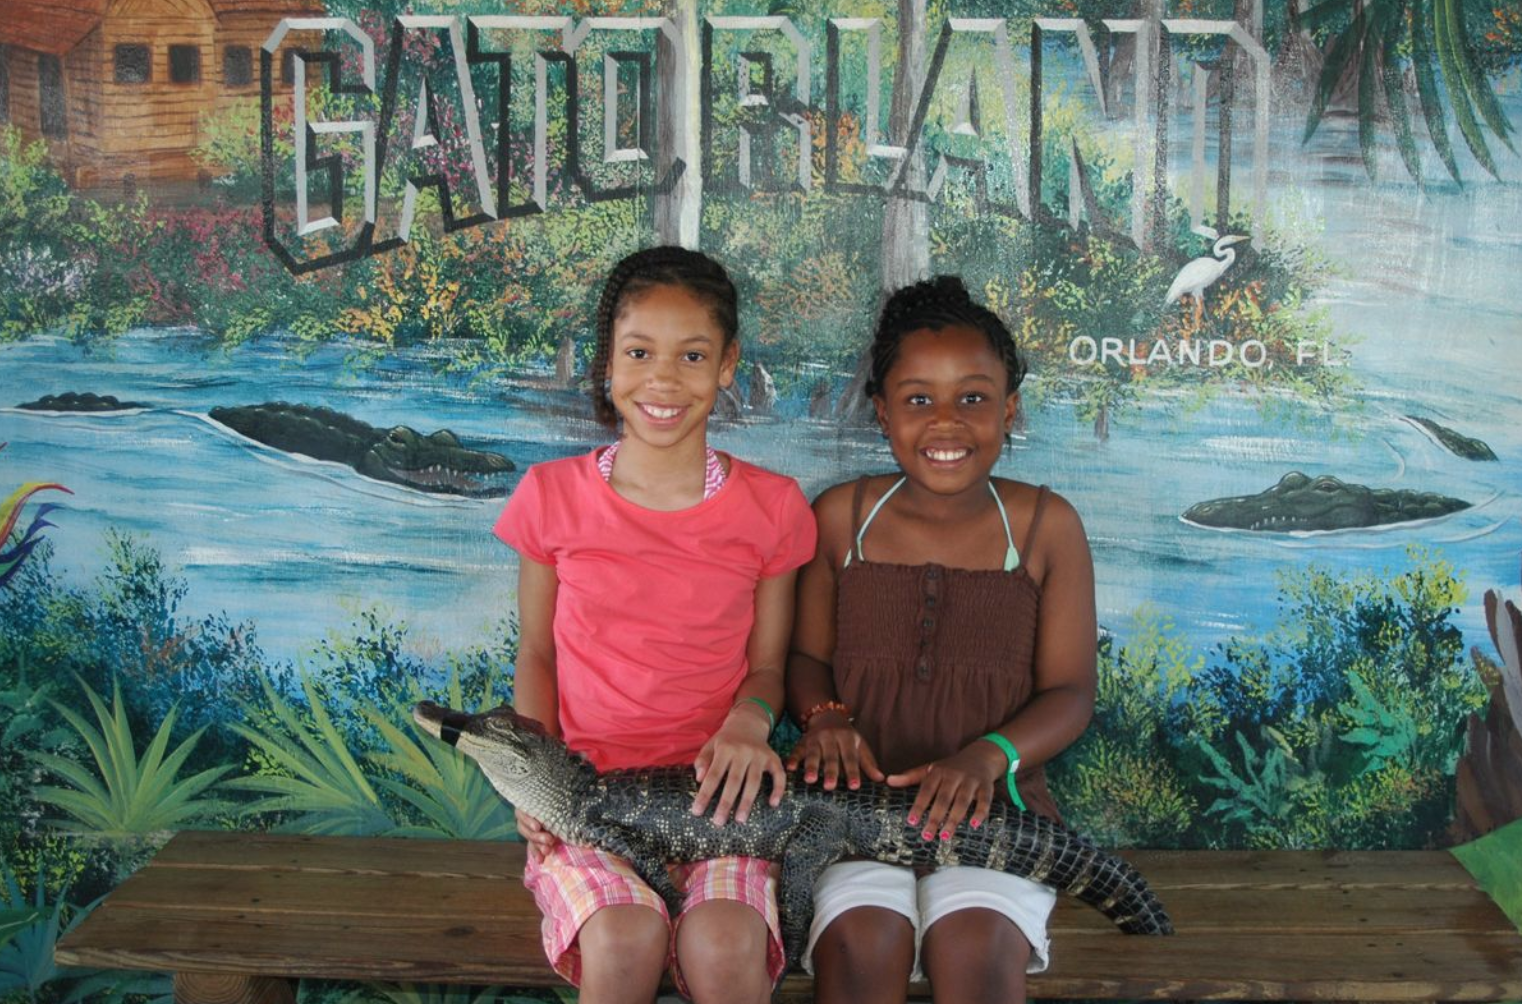 Gatorland Orlando deals: image of two girls holding a baby alligator at Gatorland Orlando theme park